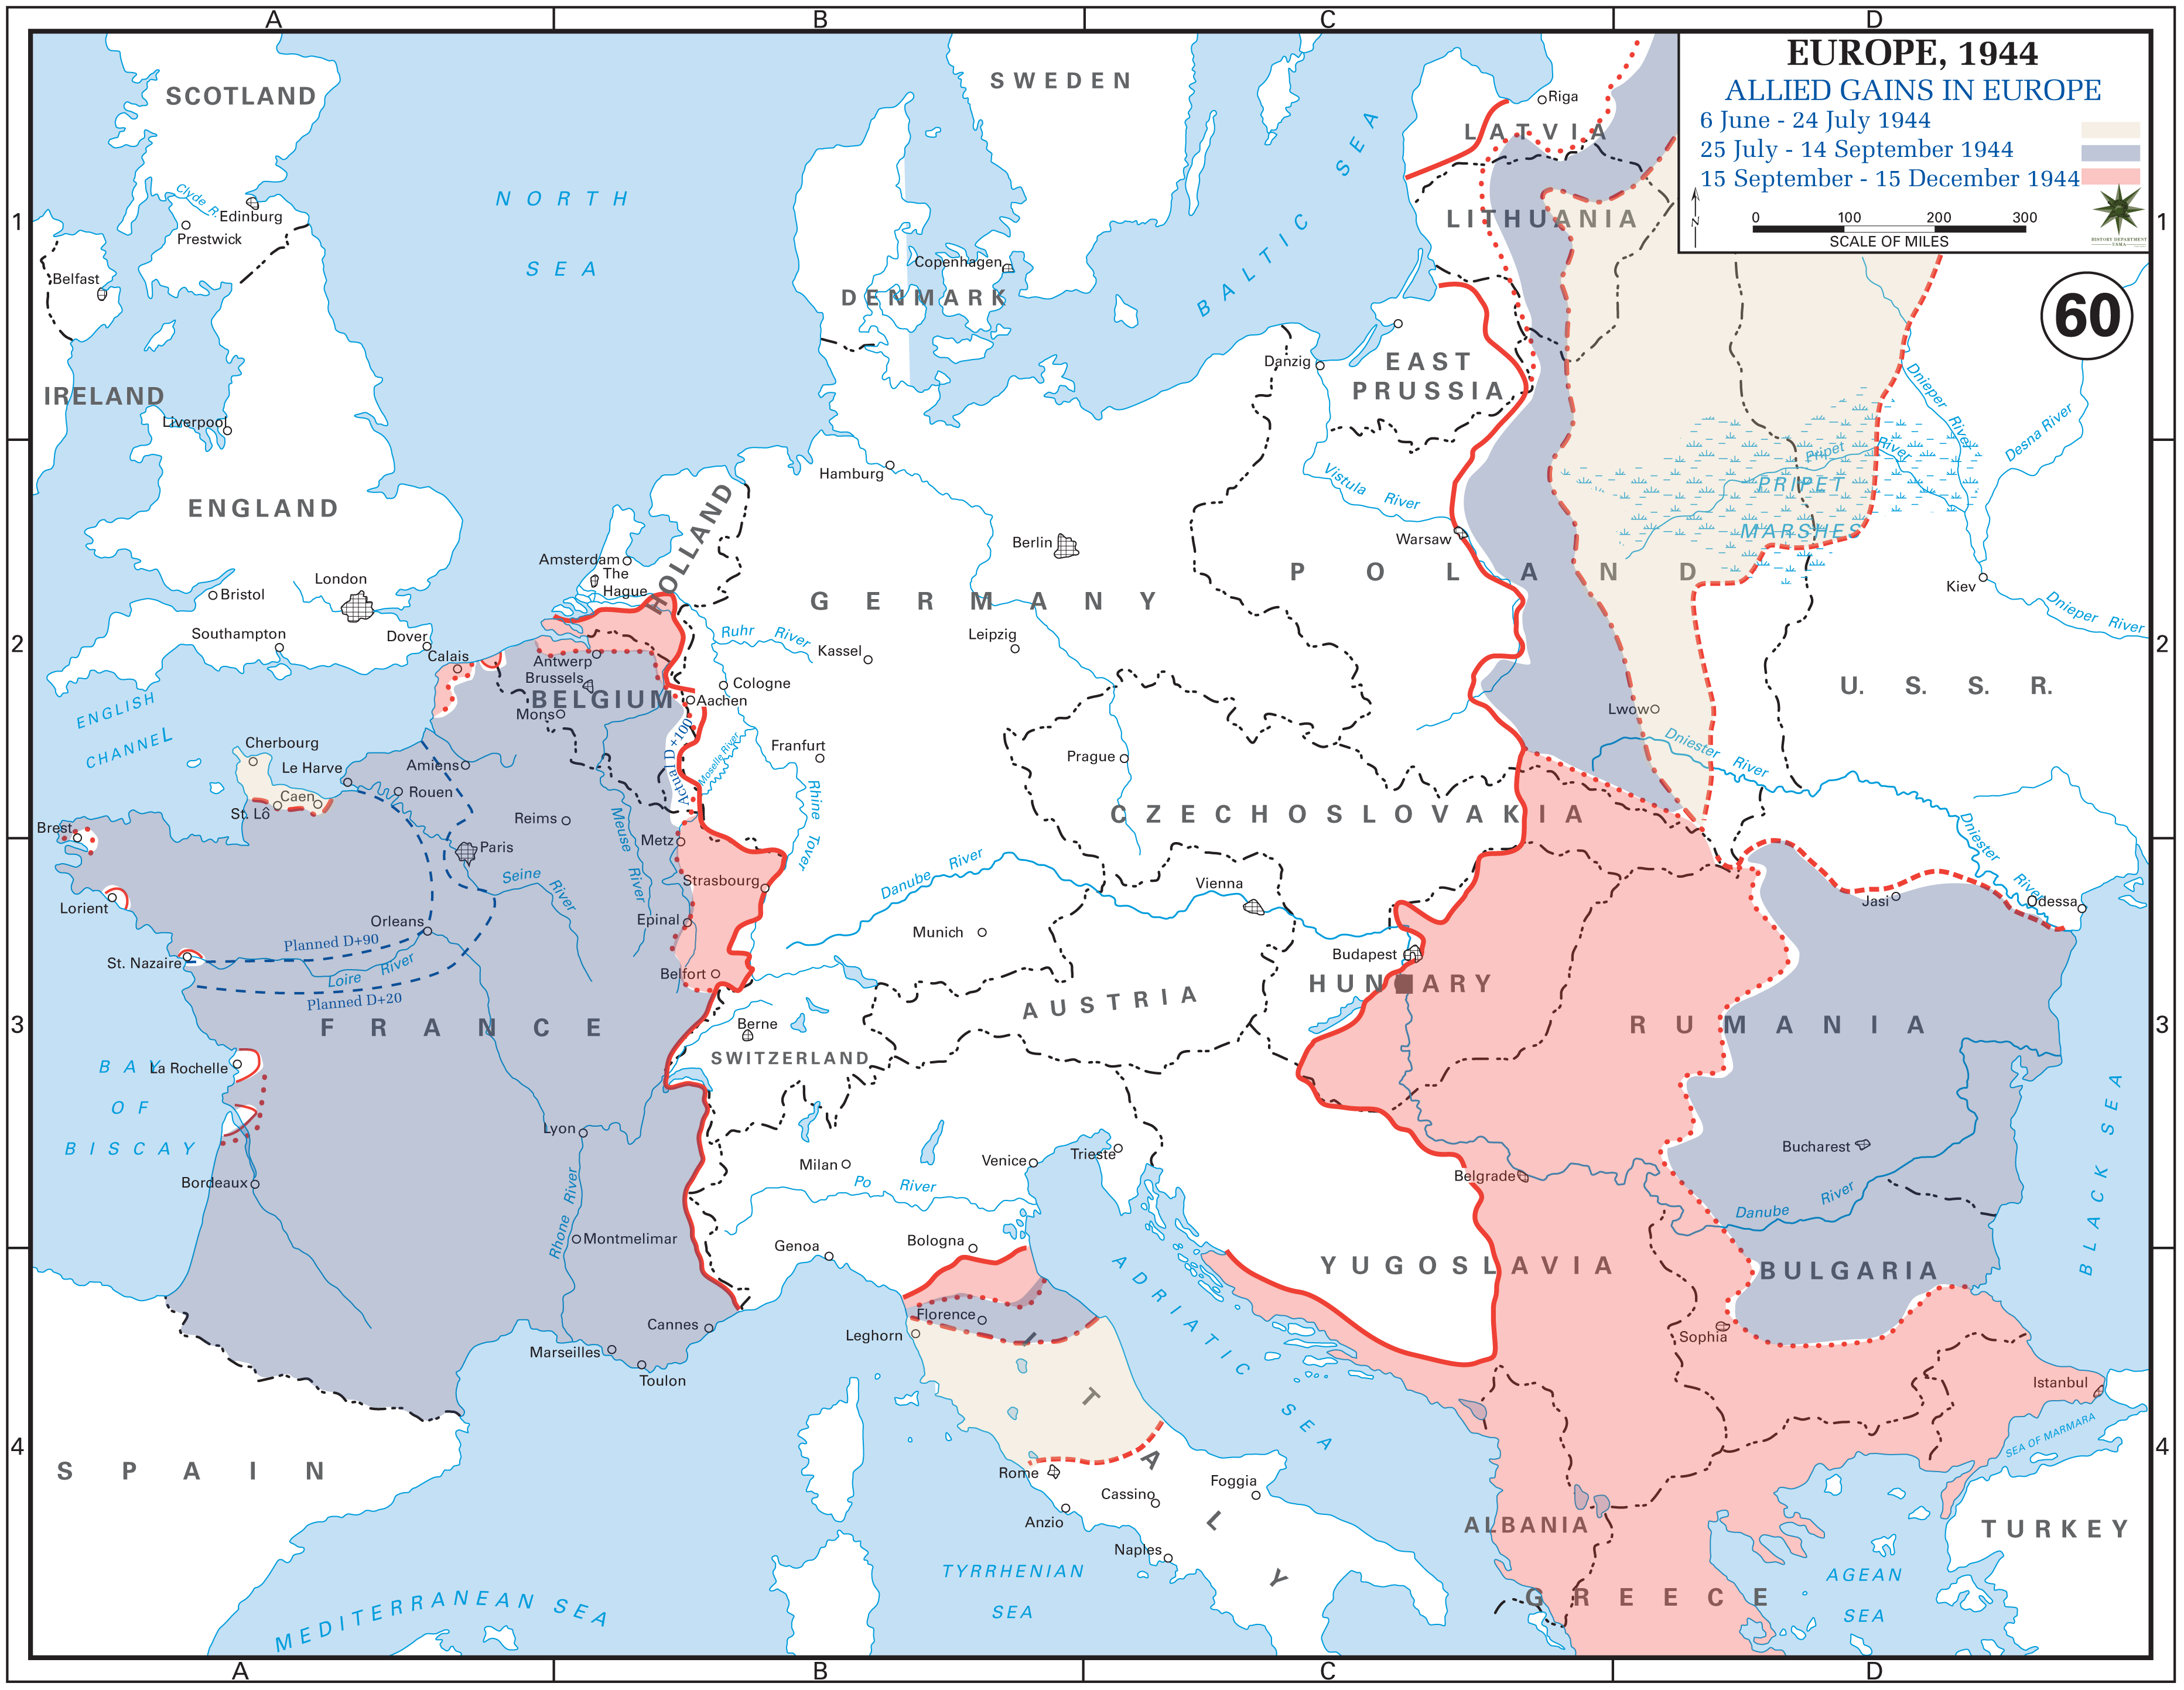 Allied gains in Europe between June and December 1944.